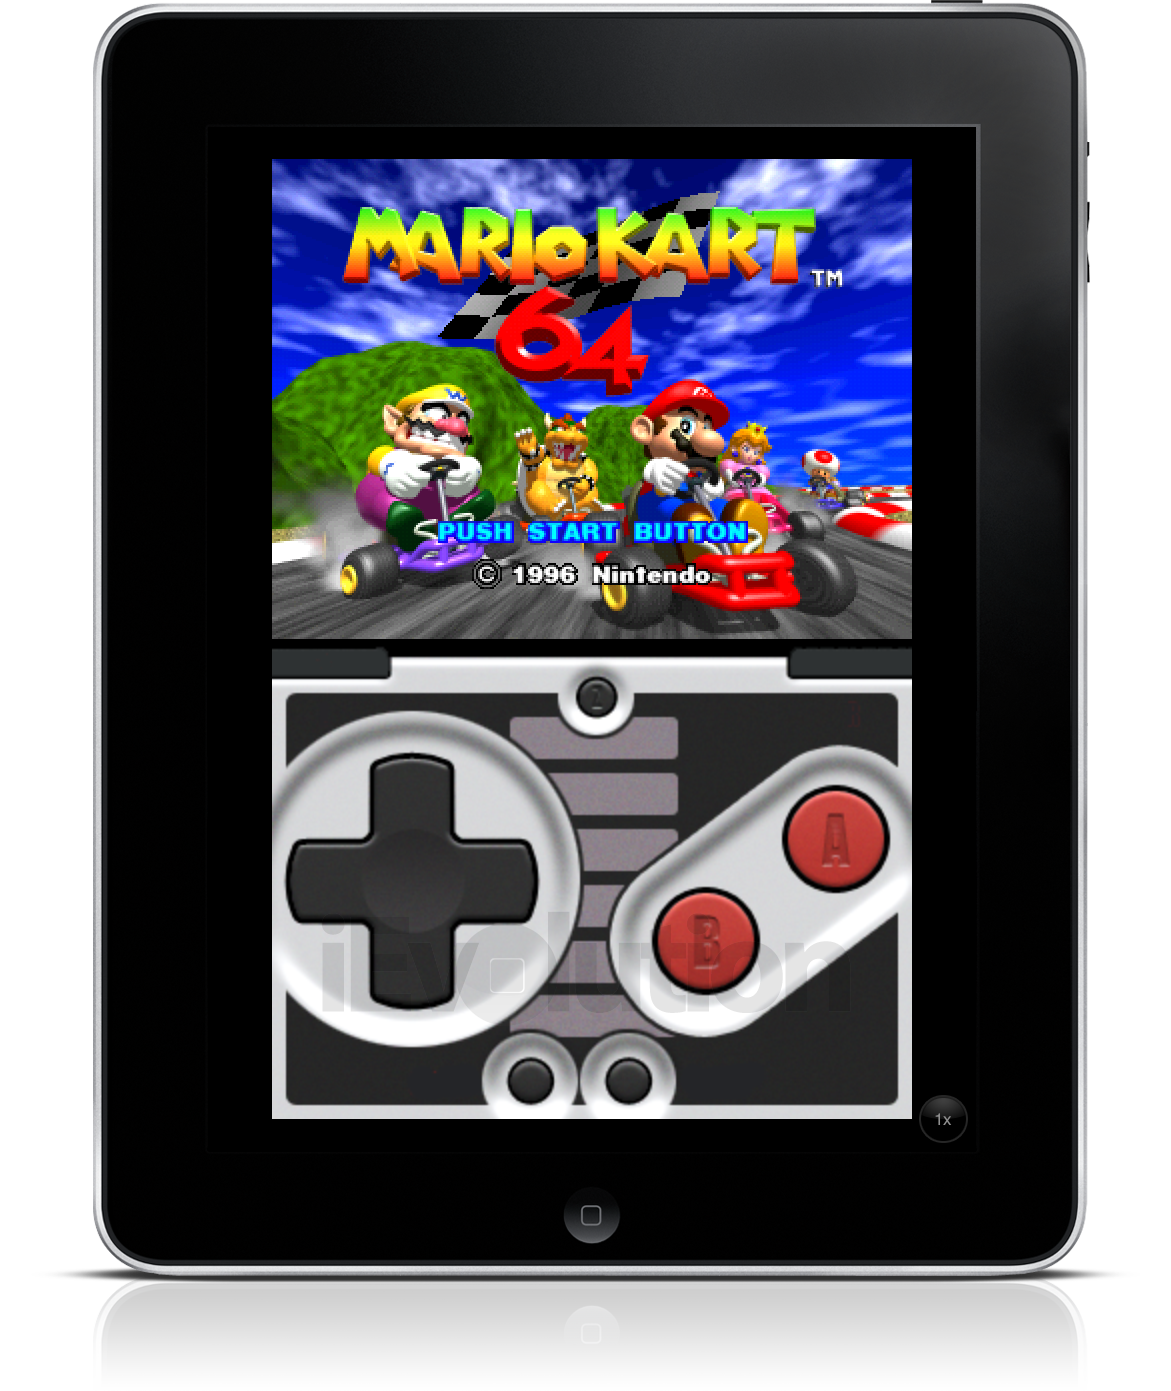 Super Mario Kart de Nintendo 64 no iPad